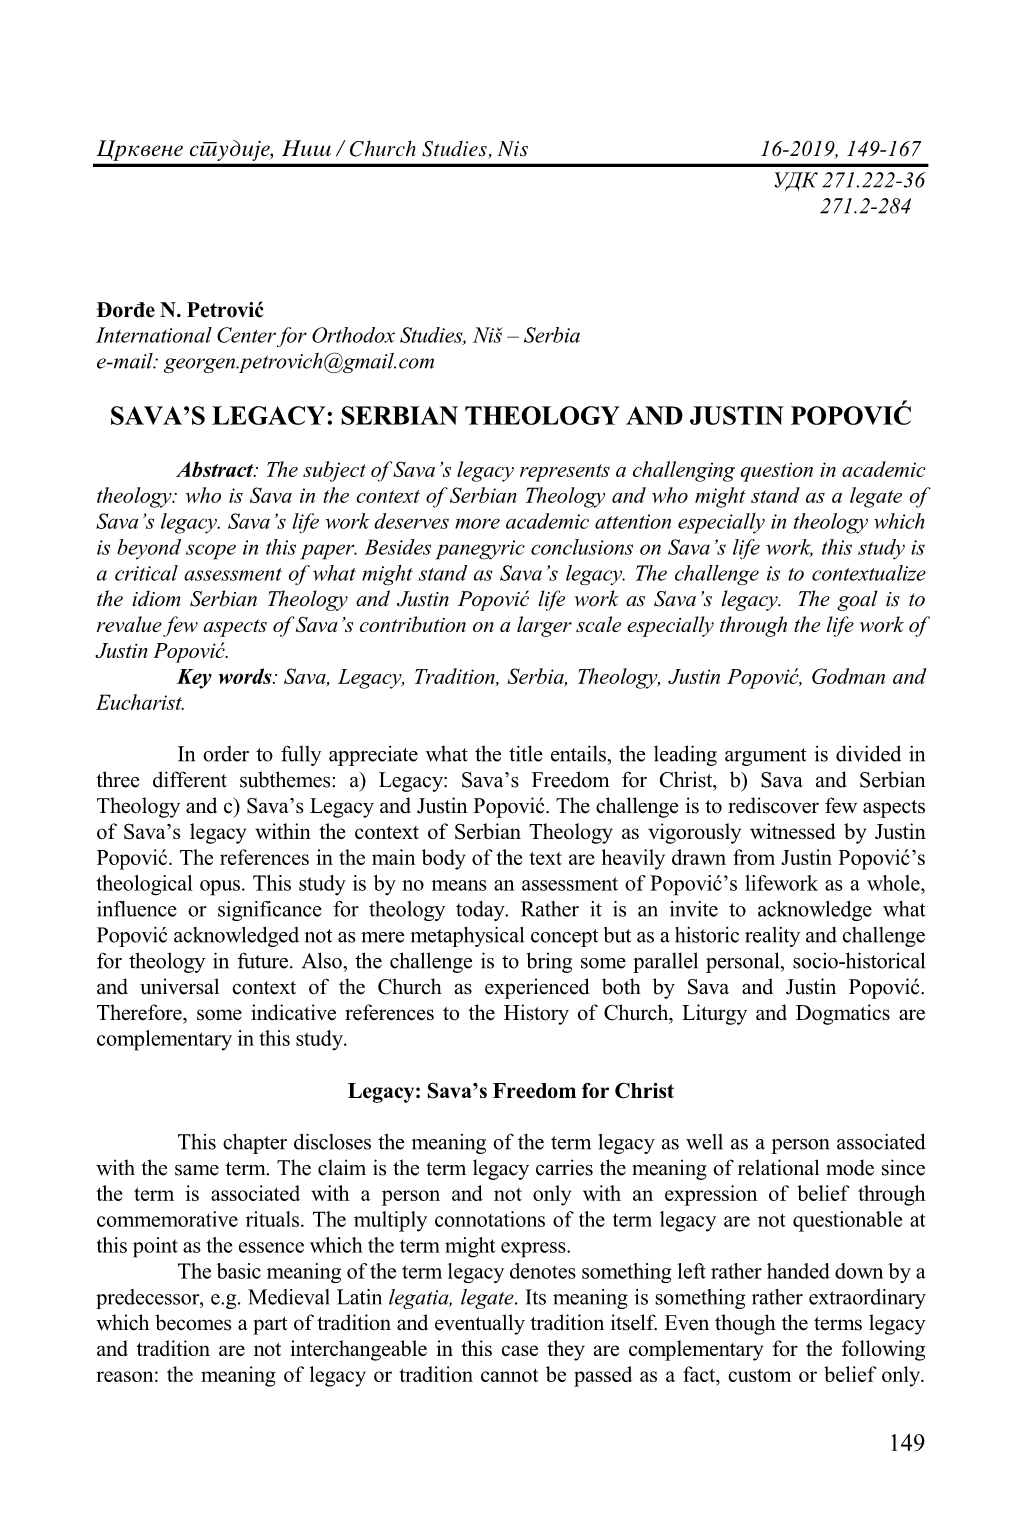 Sava's Legacy: Serbian Theology and Justin Popović